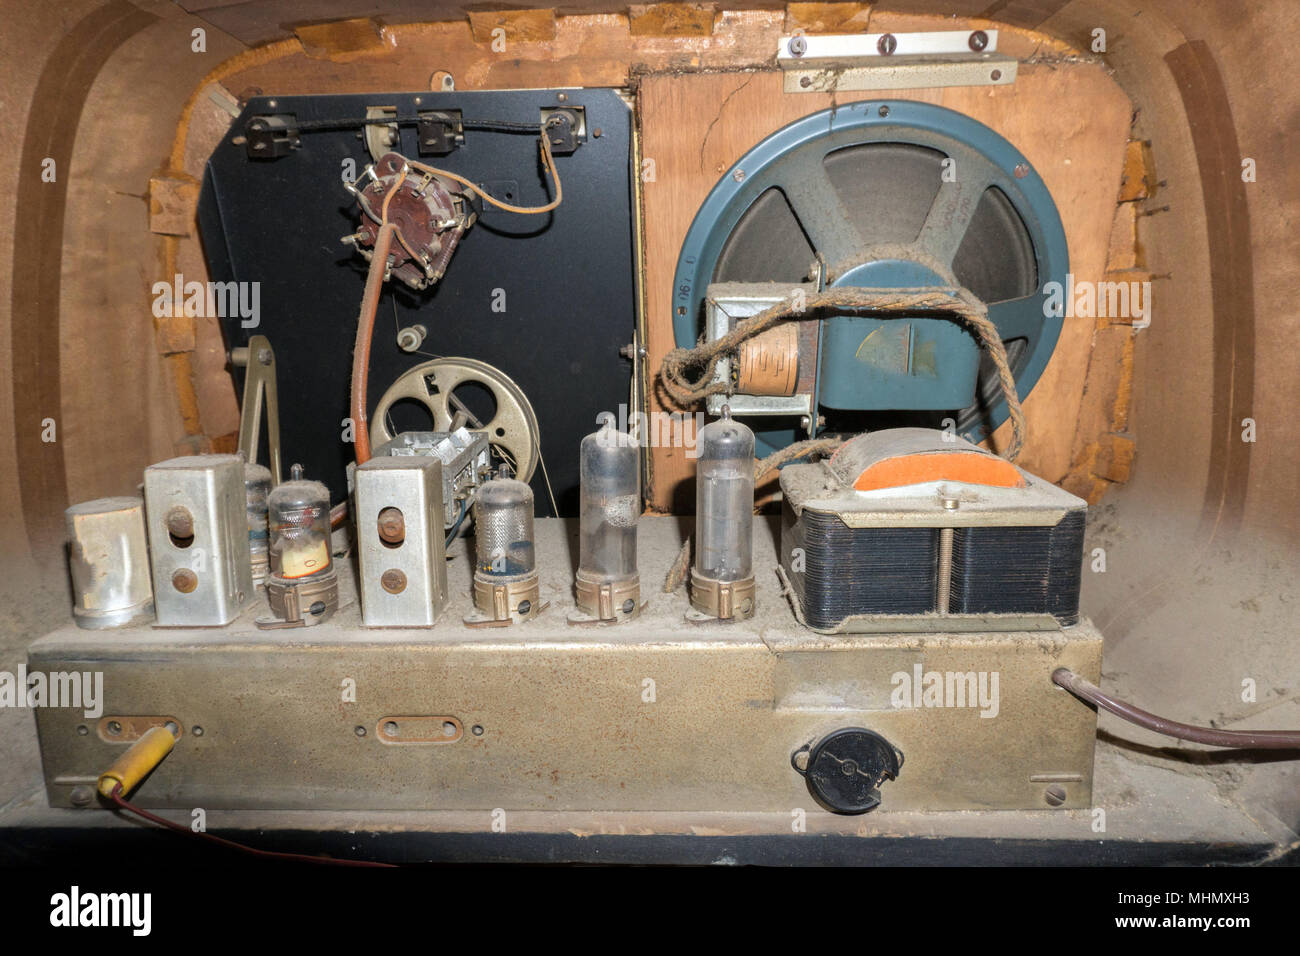 Old valve radio interior view detail Stock Photo - Alamy